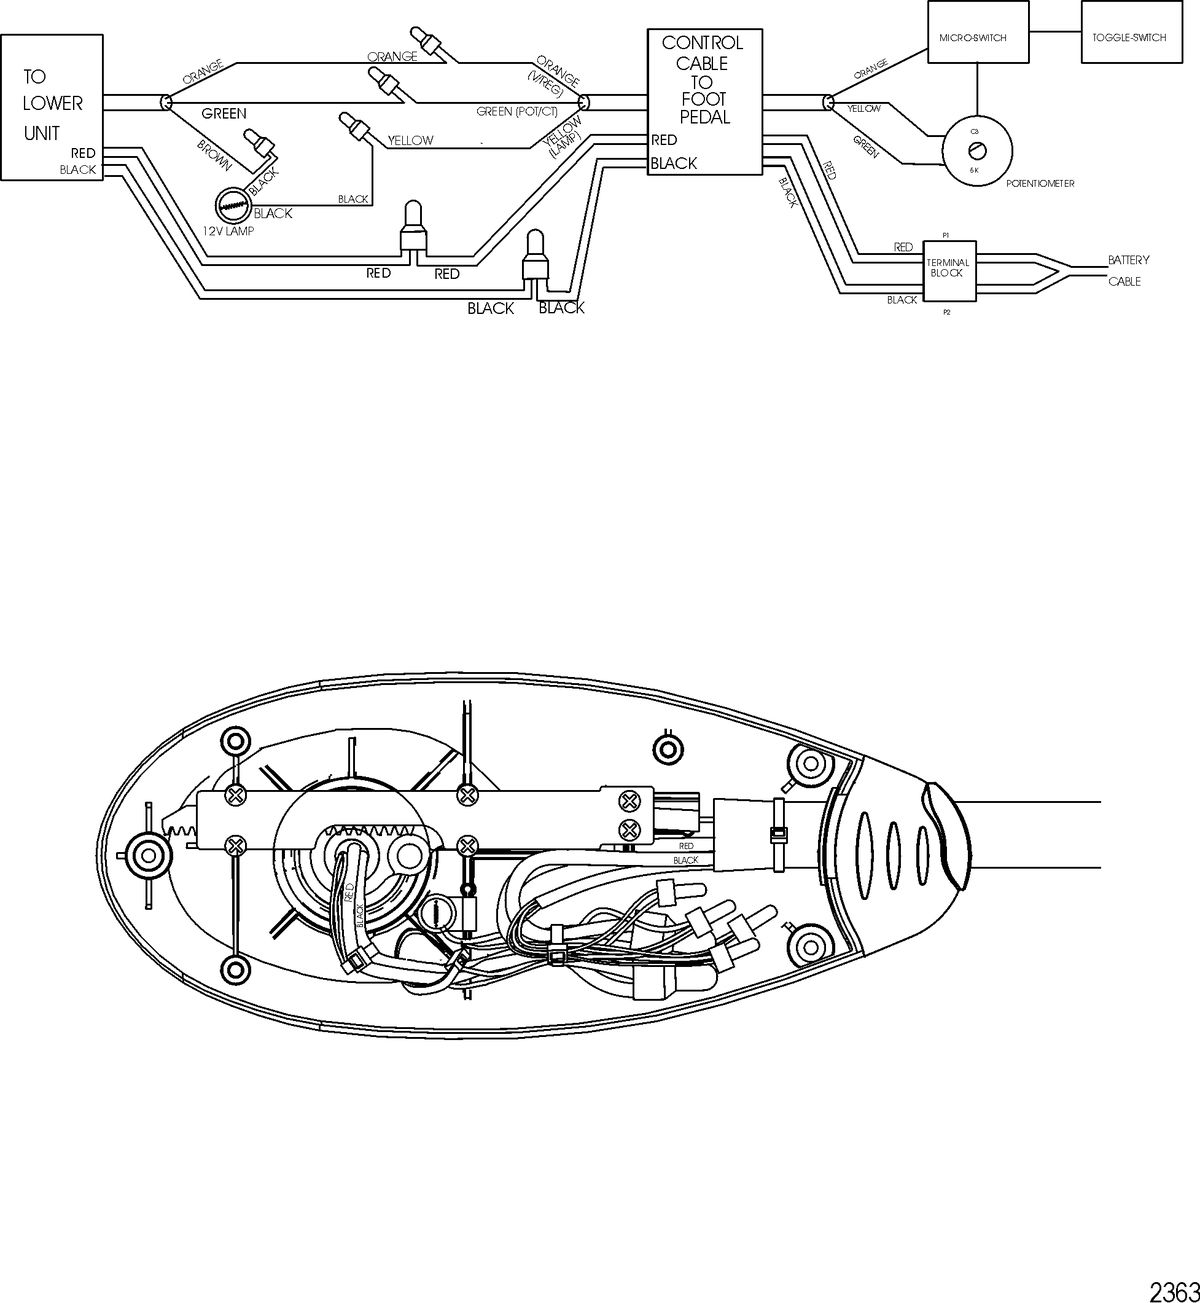 TROLLING MOTOR MOTORGUIDE FRESH WATER SERIES Wire Diagram(Model FW71FBD)